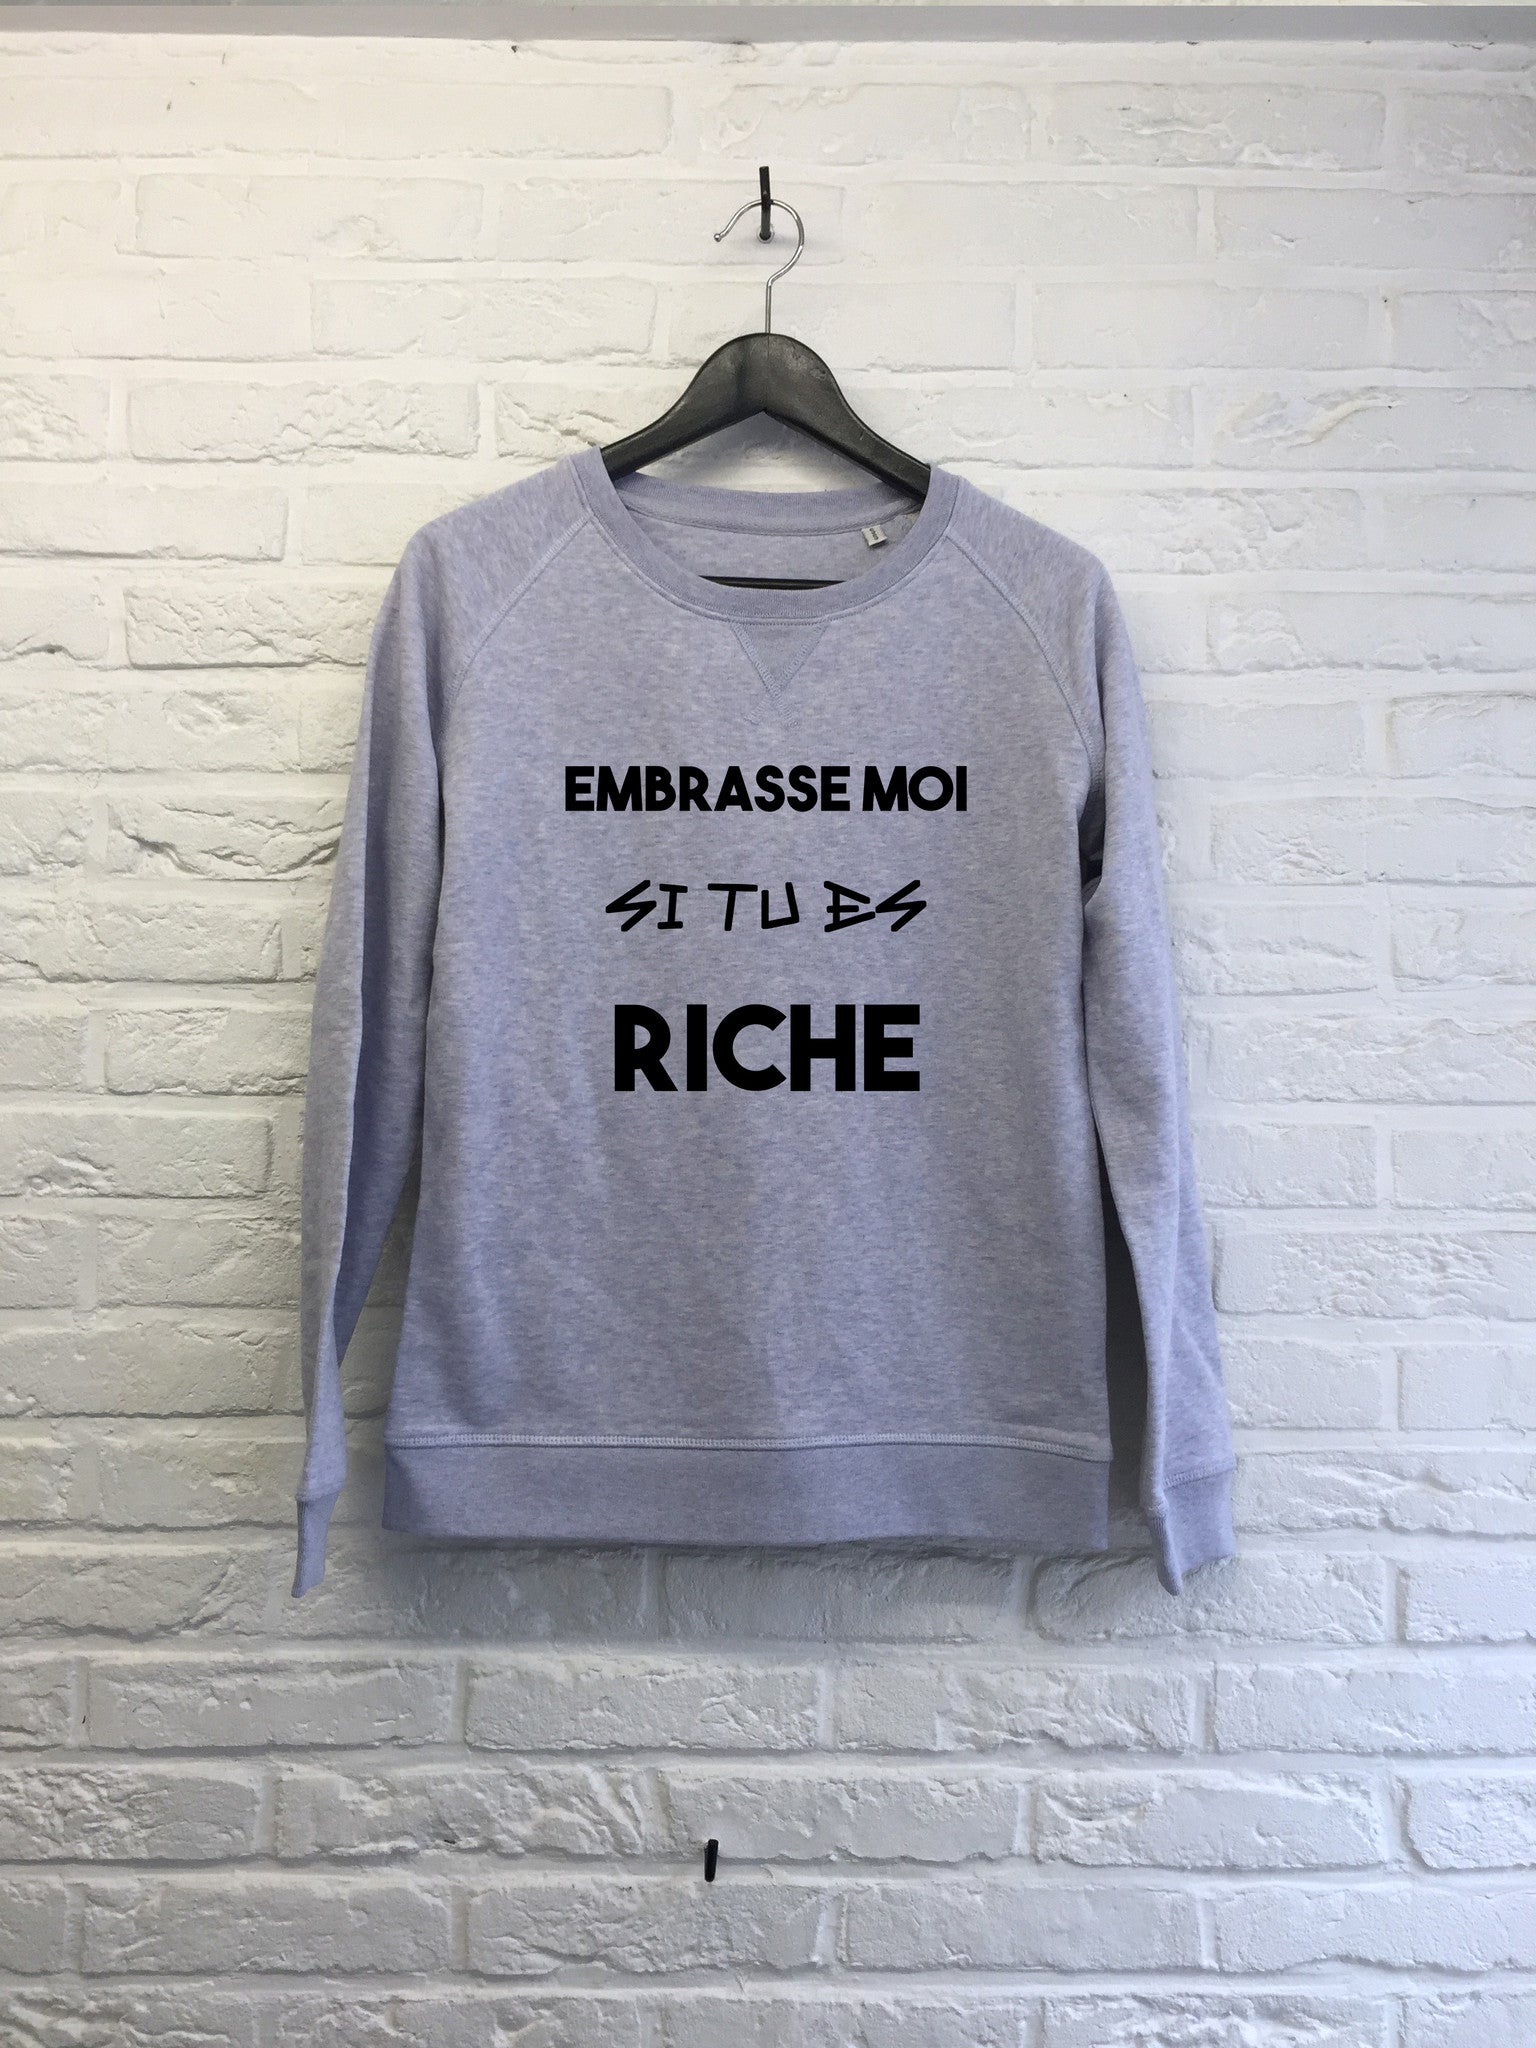 Embrasse moi si tu es riche - Sweat - Femme-Sweat shirts-Atelier Amelot